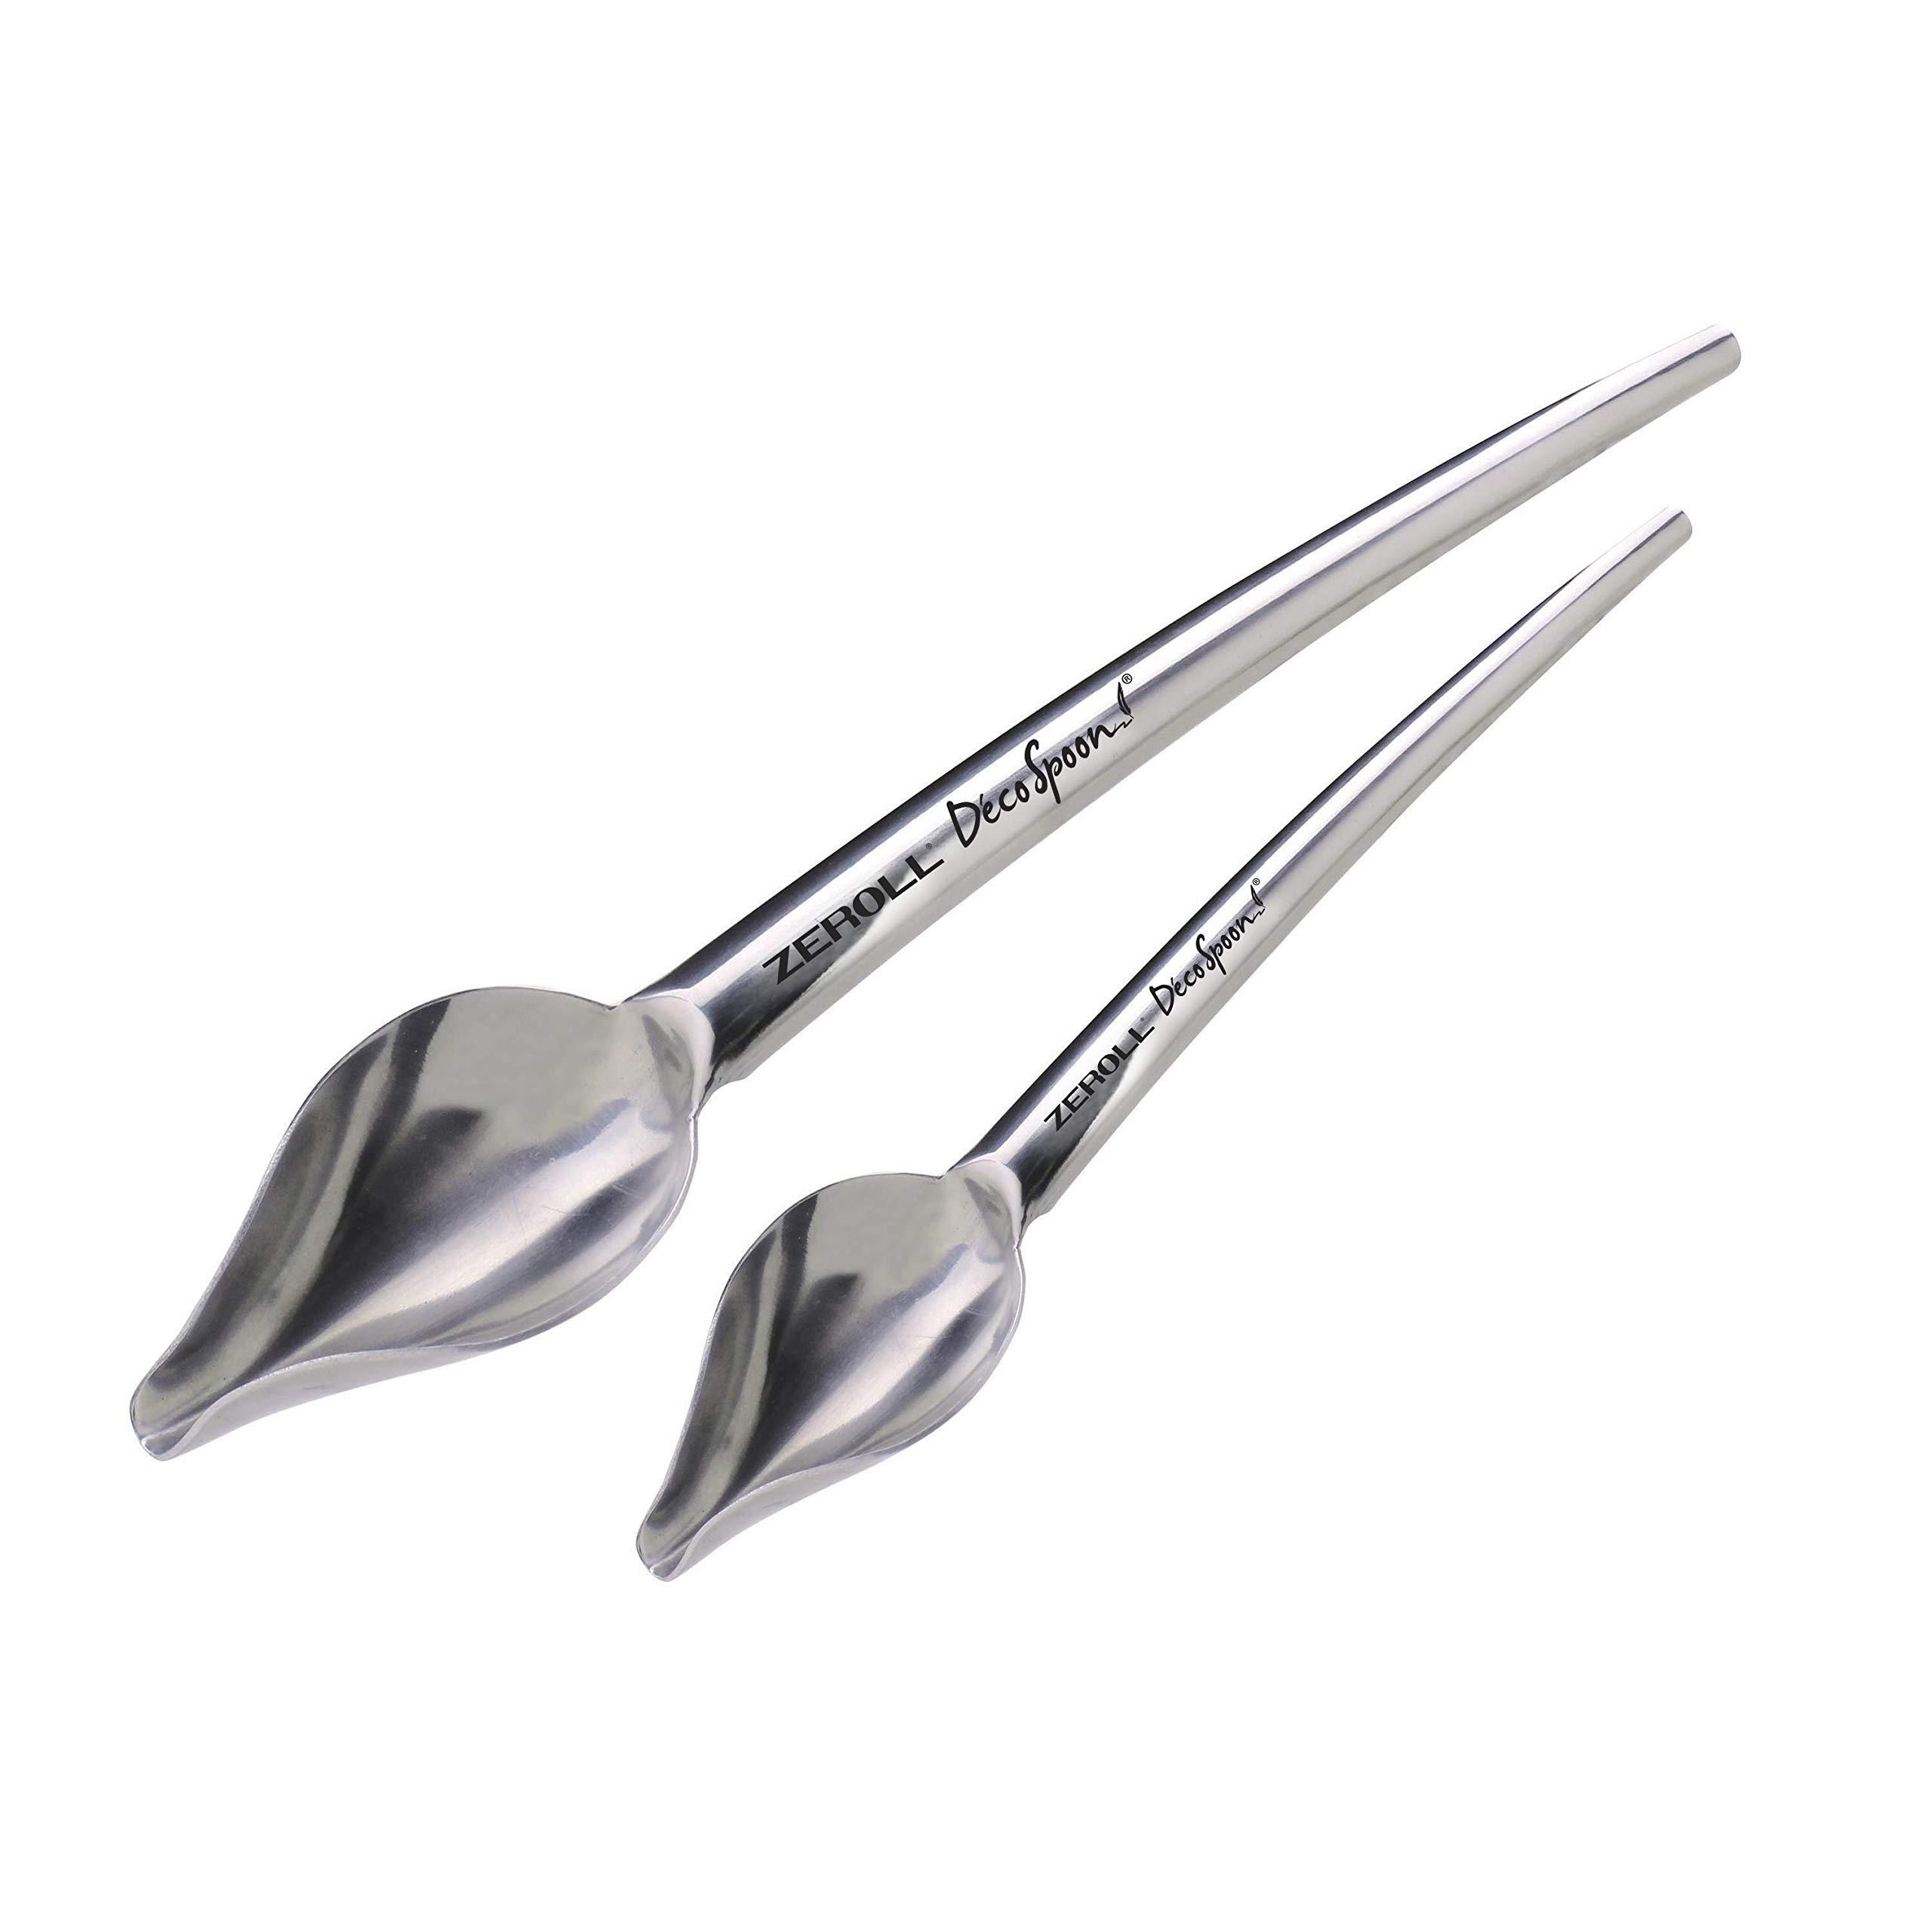 zeroll deco stainless steel spoon set, silver, 9-inch